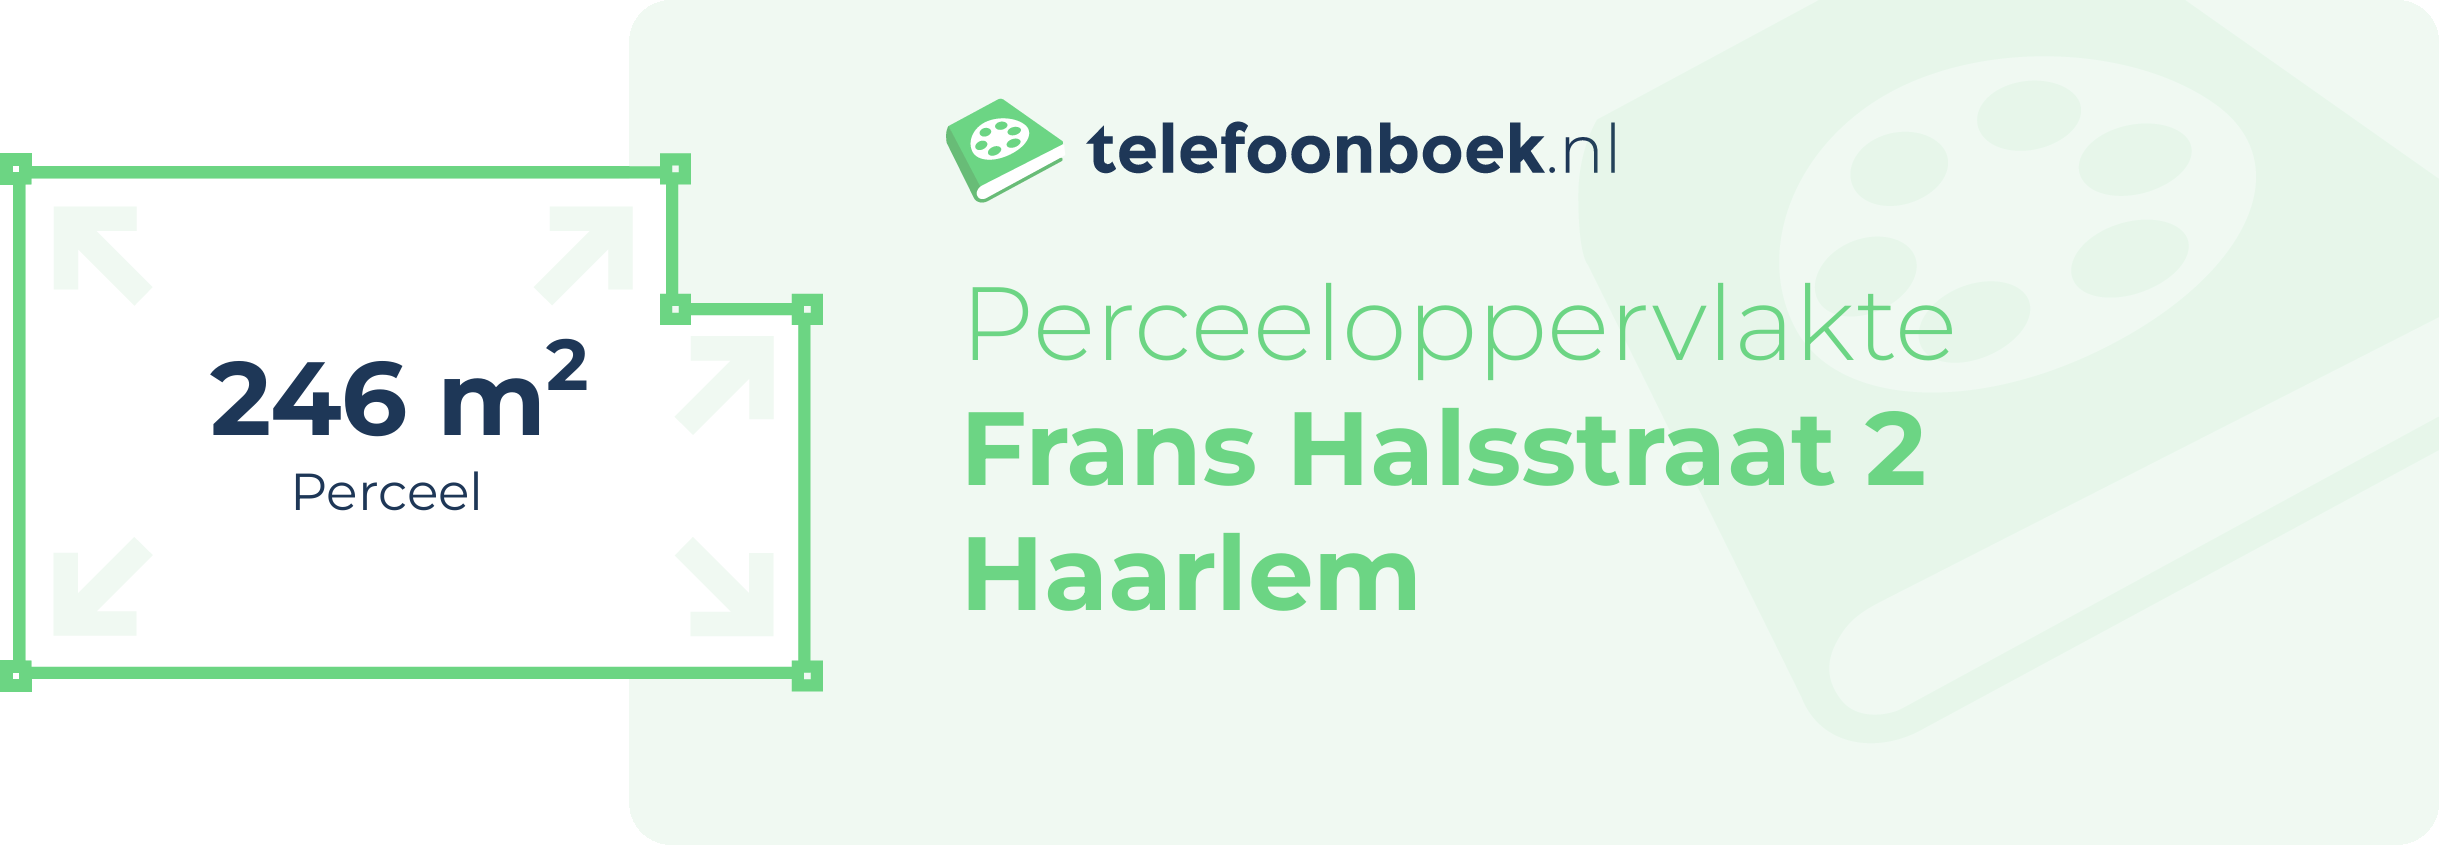 Perceeloppervlakte Frans Halsstraat 2 Haarlem